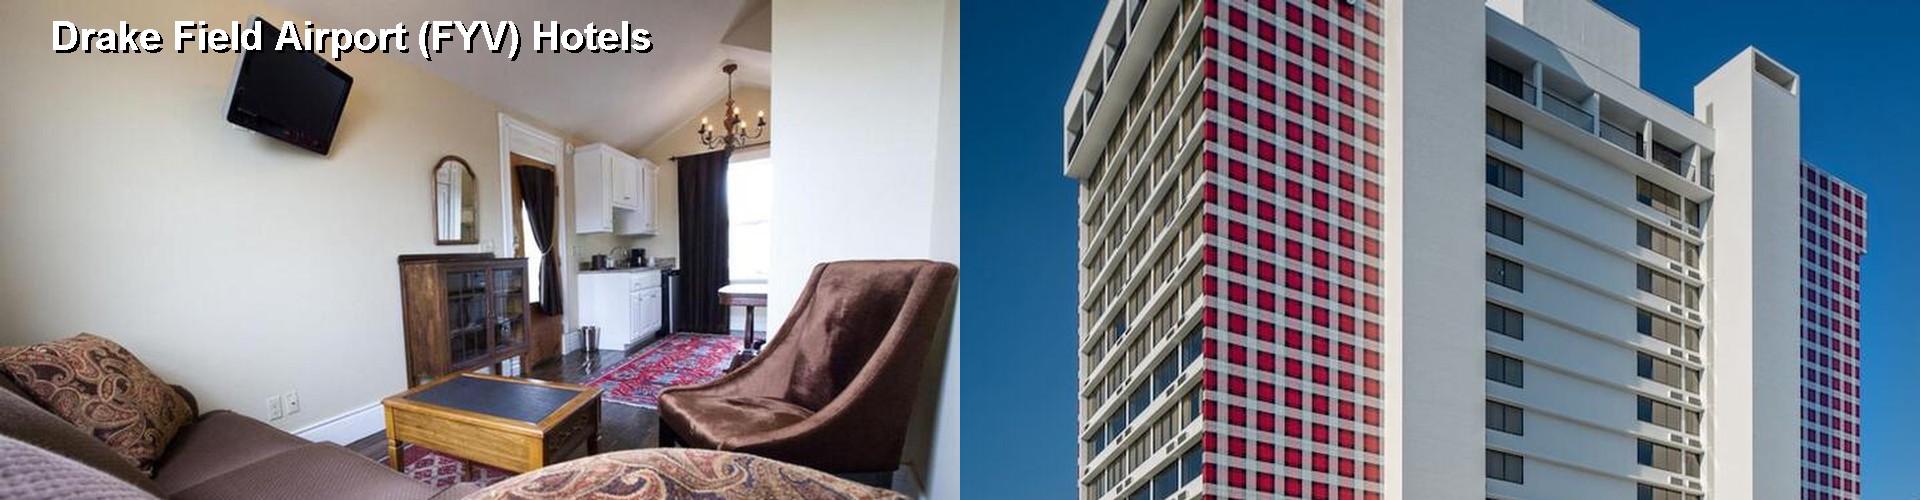 3 Best Hotels near Drake Field Airport (FYV)